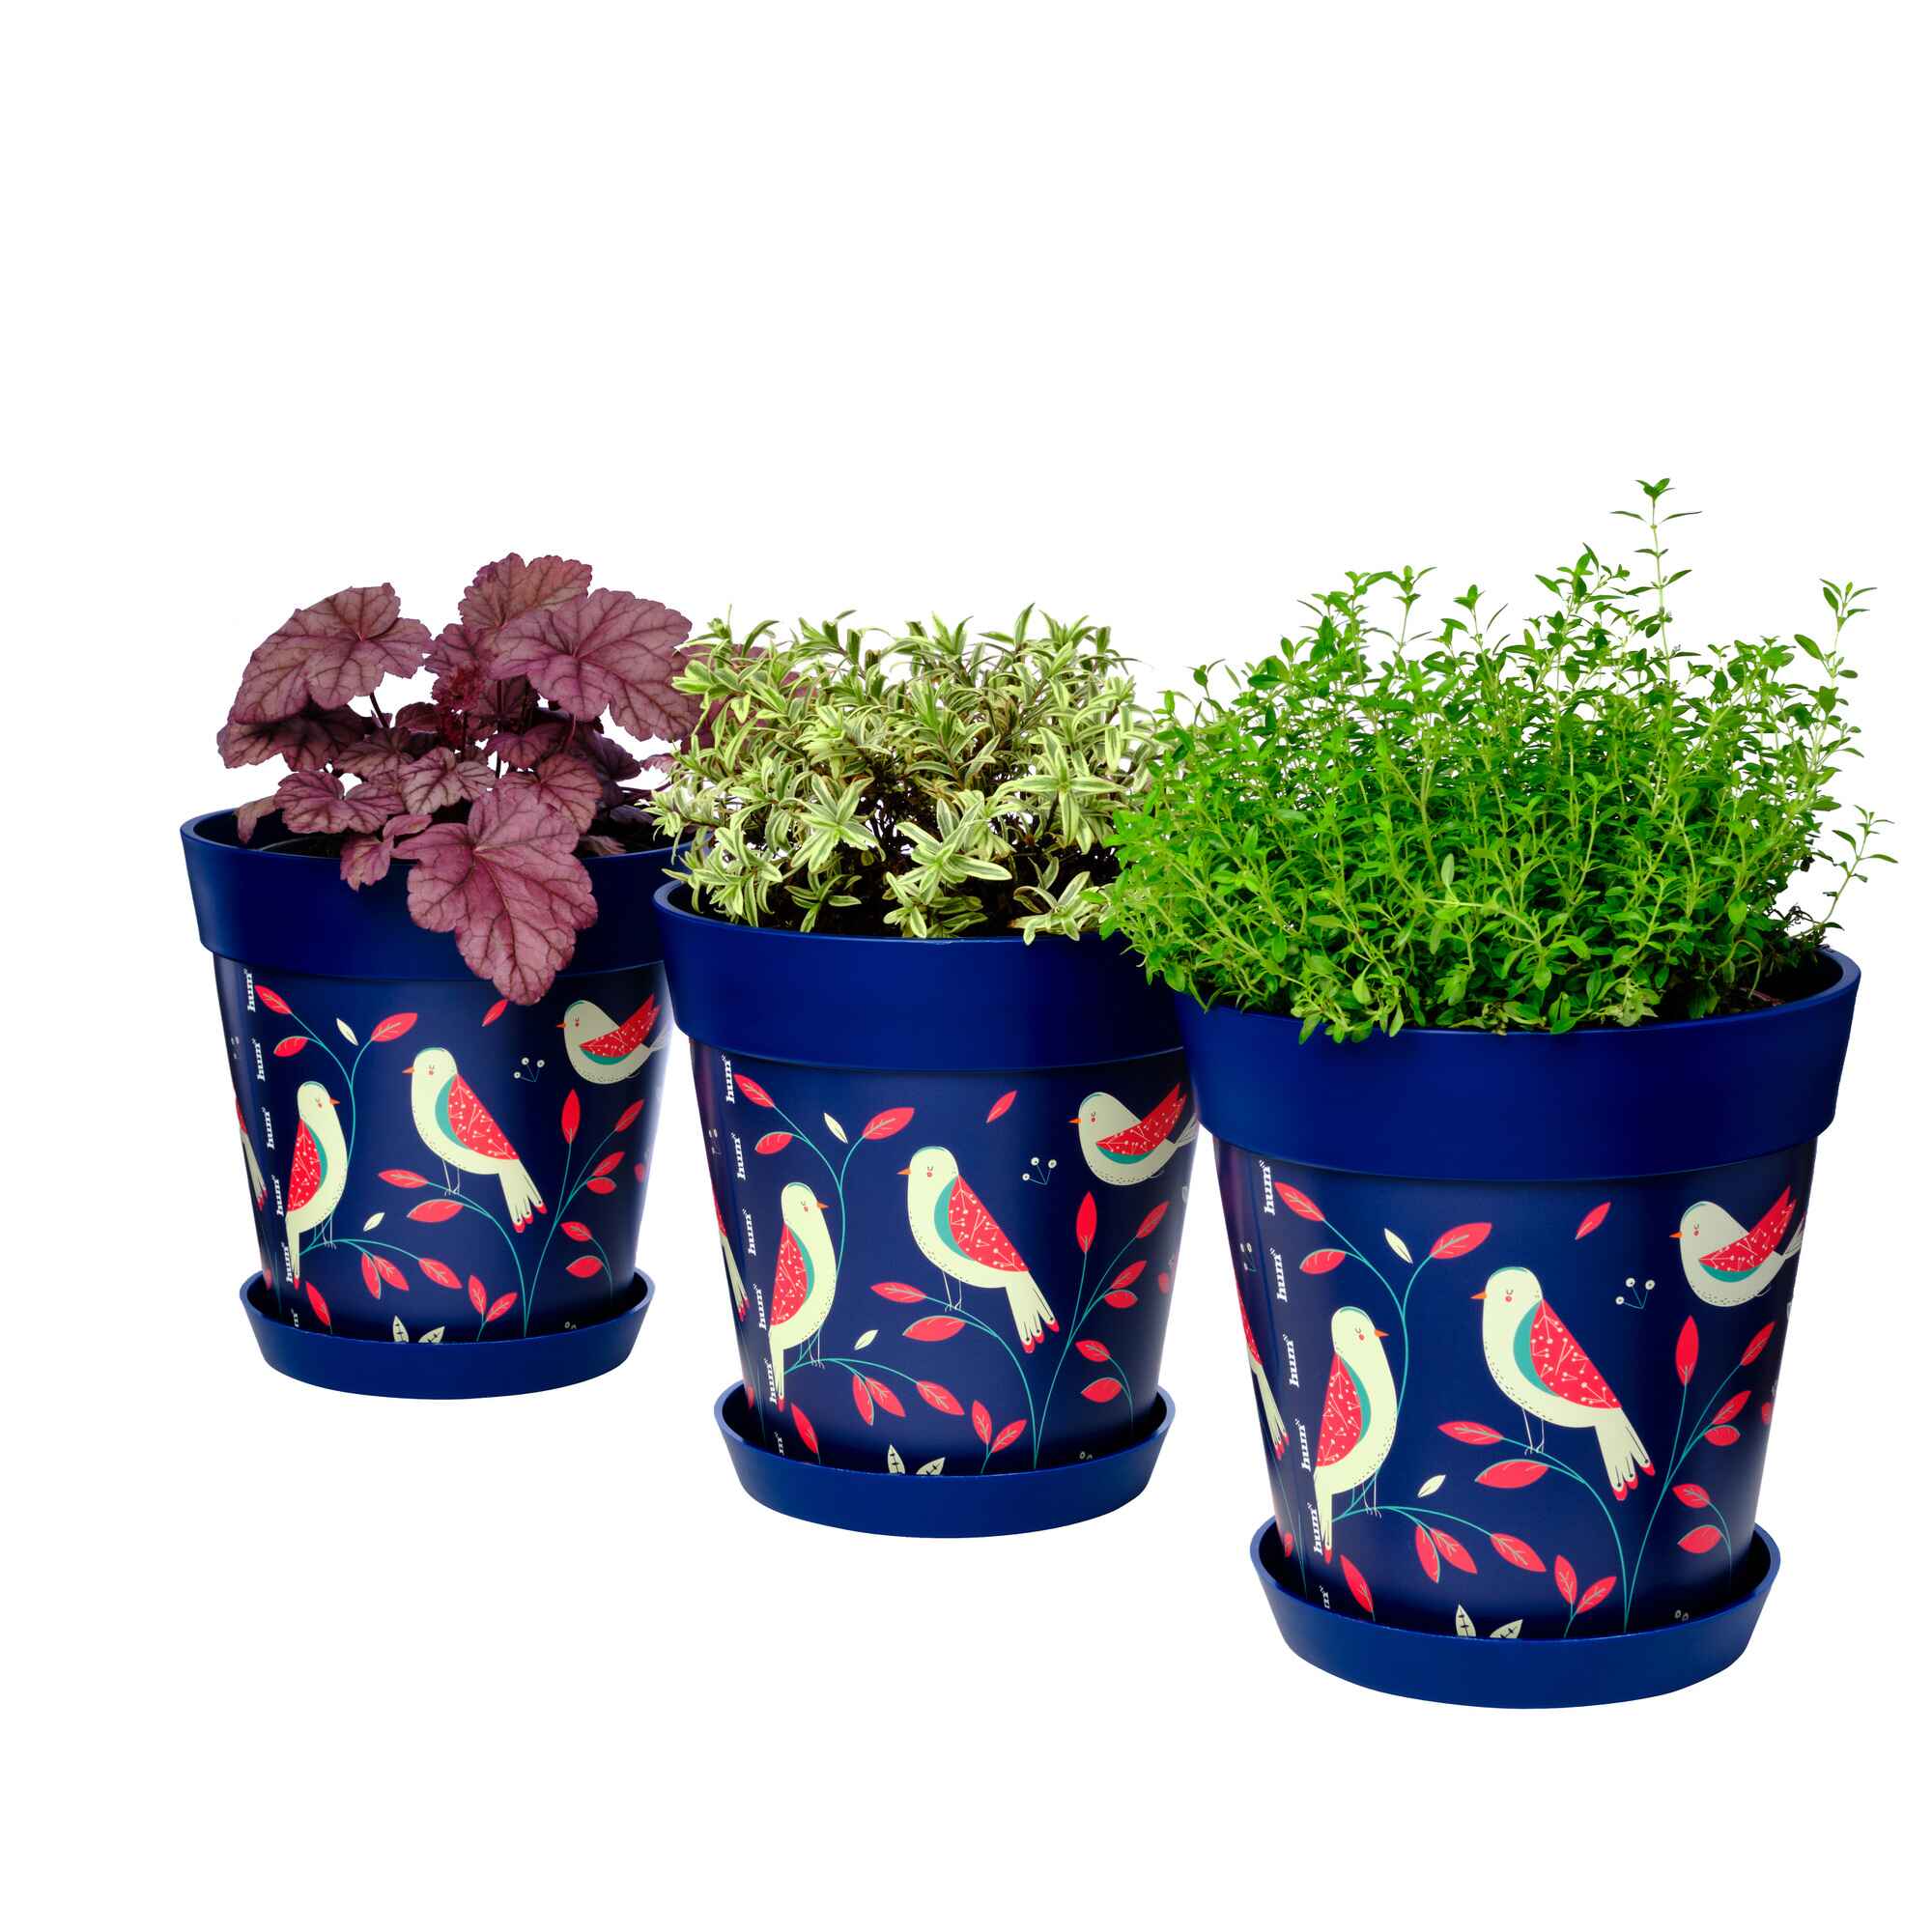 Picture of 3 Planted Medium 22cm Blue Bird Plastic Indoor/Outdoor Flowerpot and Saucers